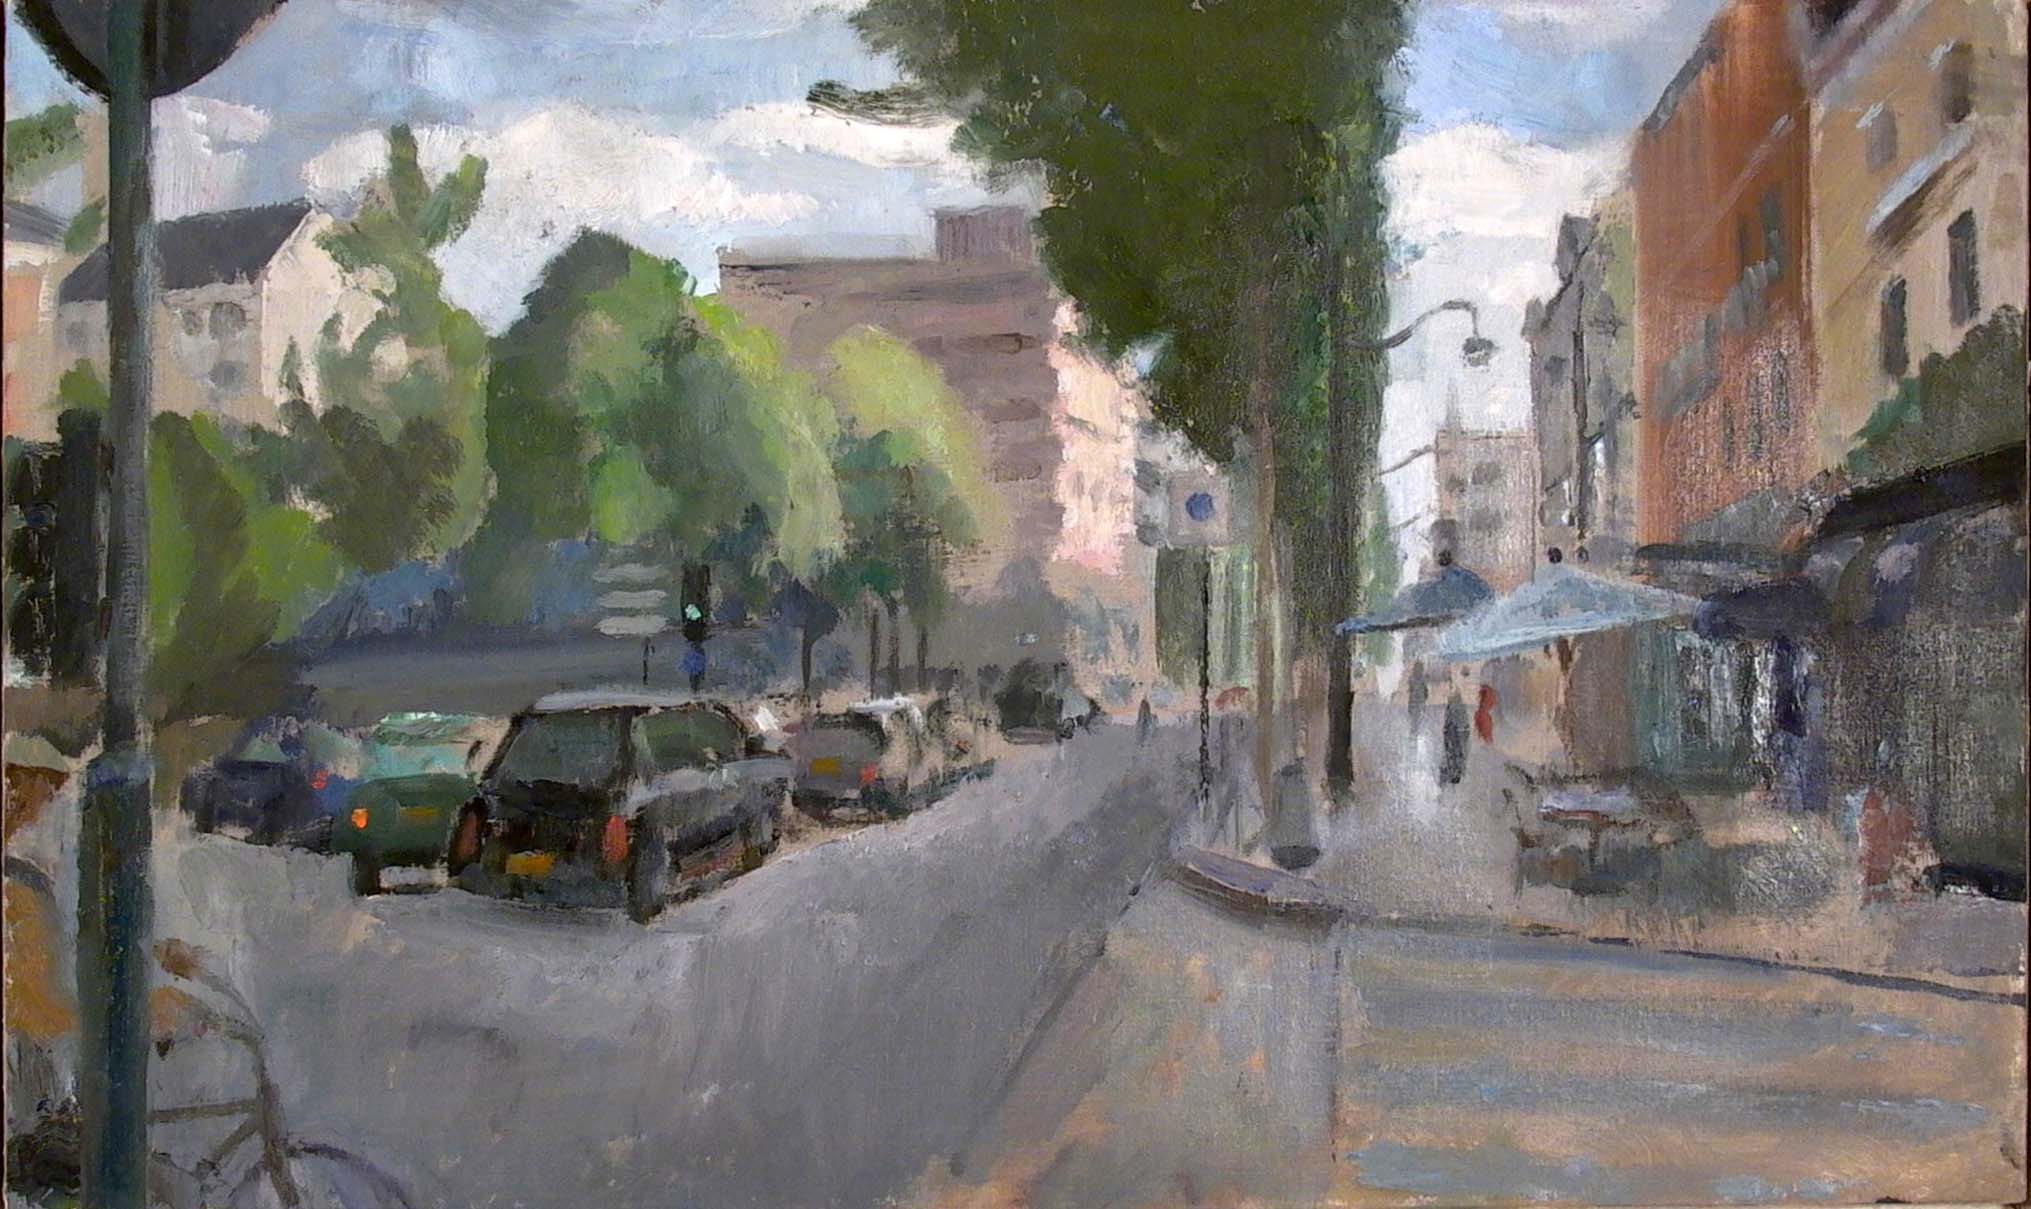 Place de Bretagne, 15" x 23", oil on muslin on panel, 2005.